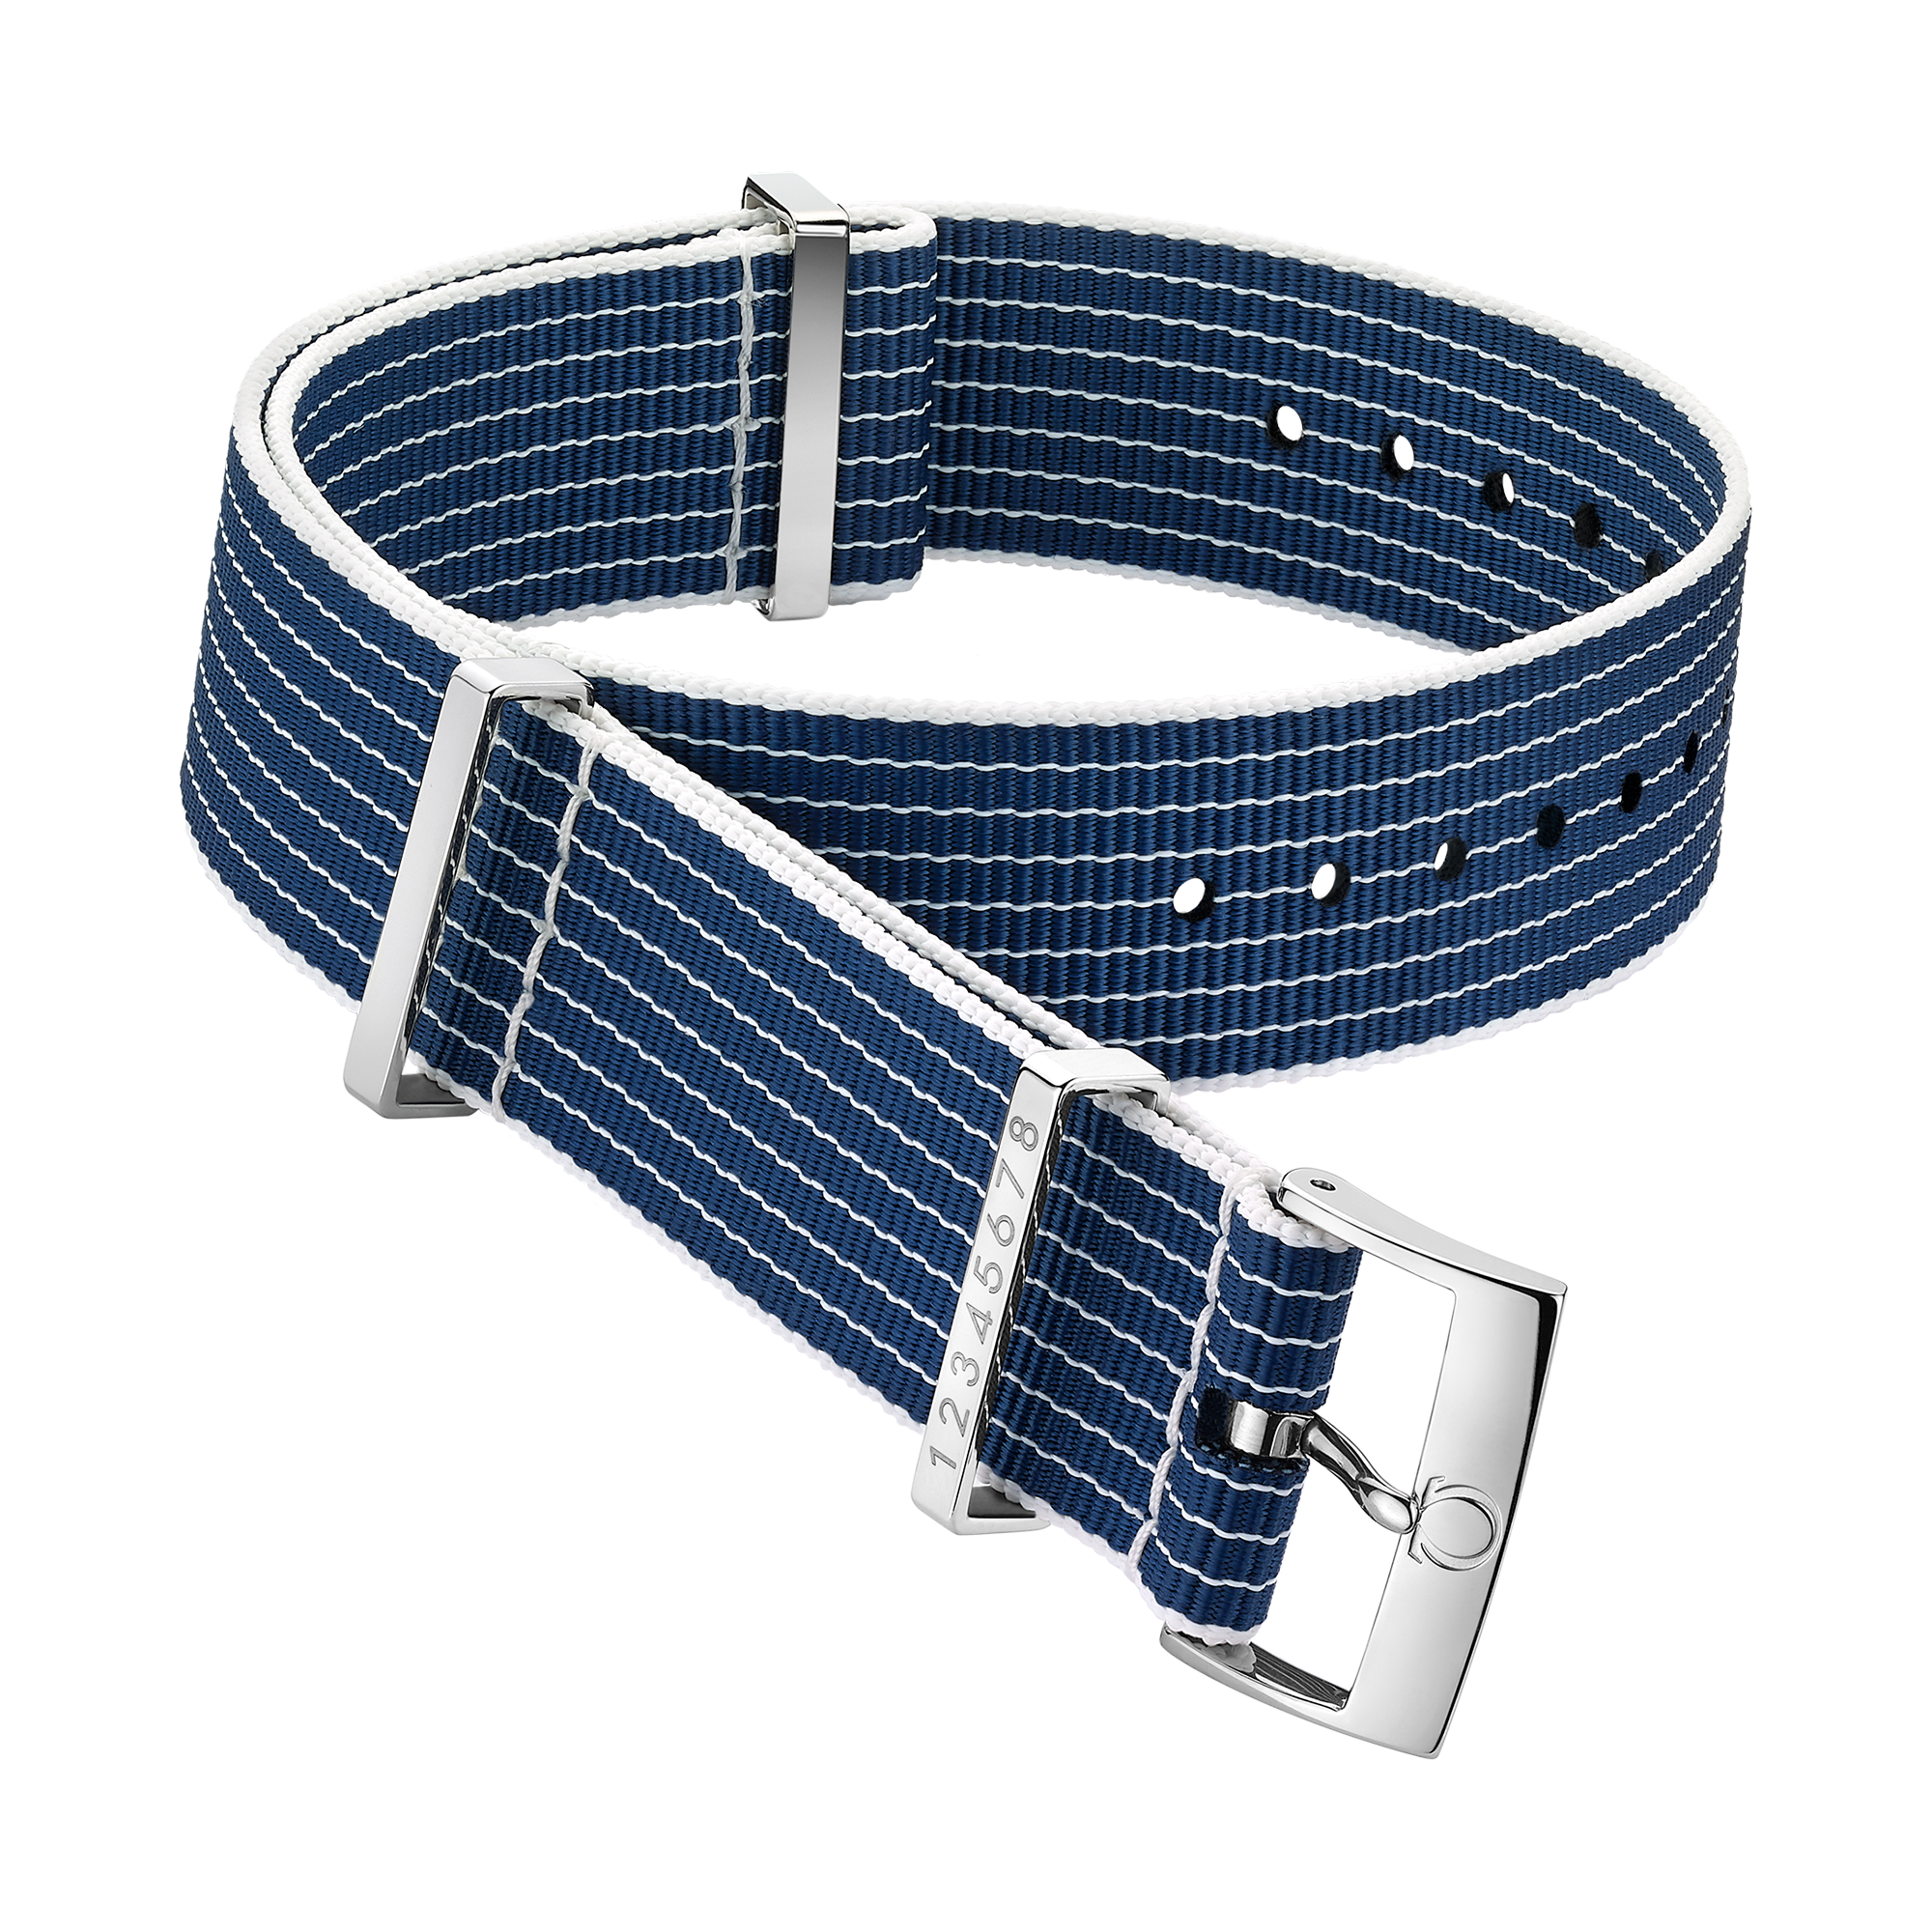 Cinturino NATO - Cinturino stile pista d’atletica in poliammide blu con cuciture bianche - 031CWZ005945